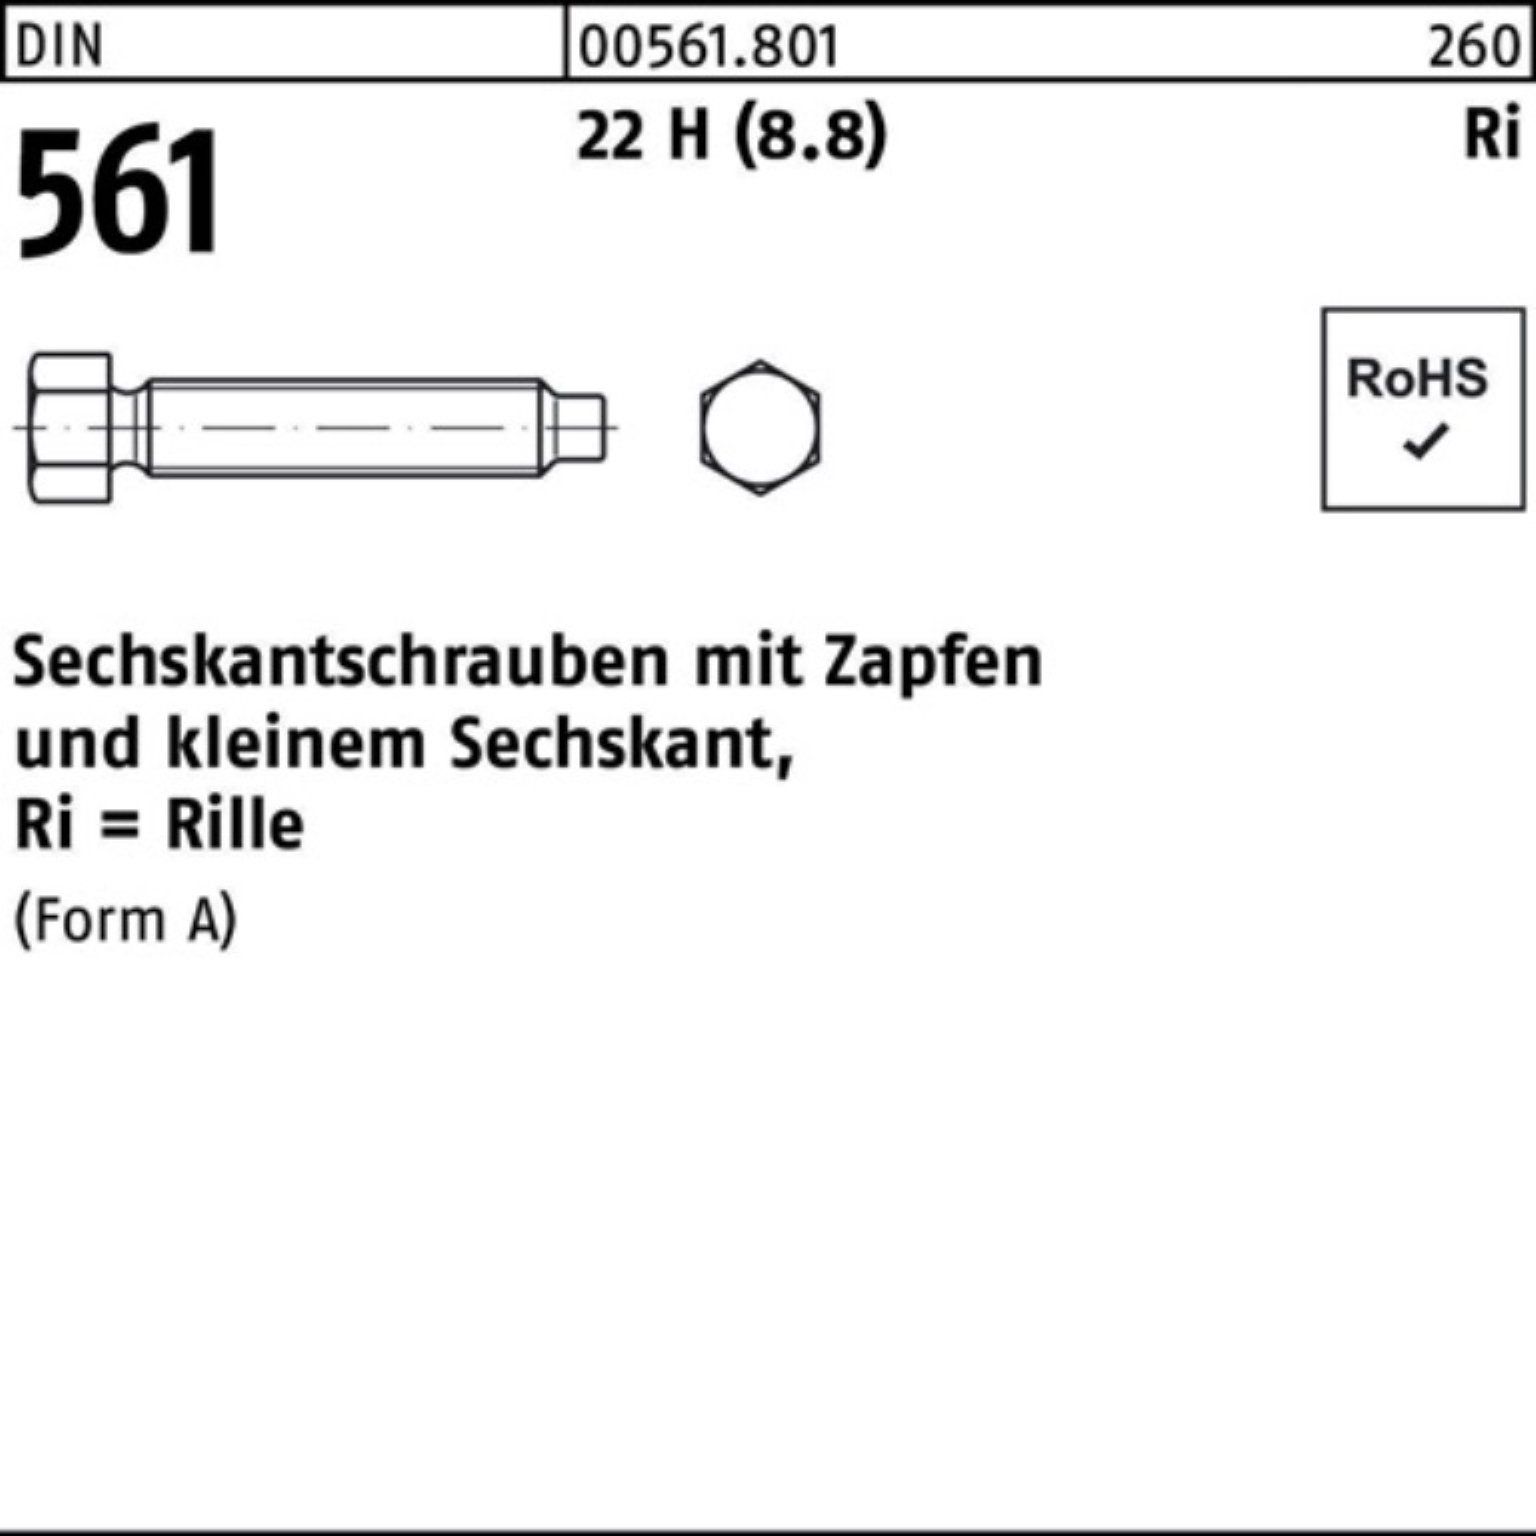 Reyher Sechskantschraube 100er Pack 10 DIN AM 60 16x St 561 H Zapfen (8.8) 22 Sechskantschraube